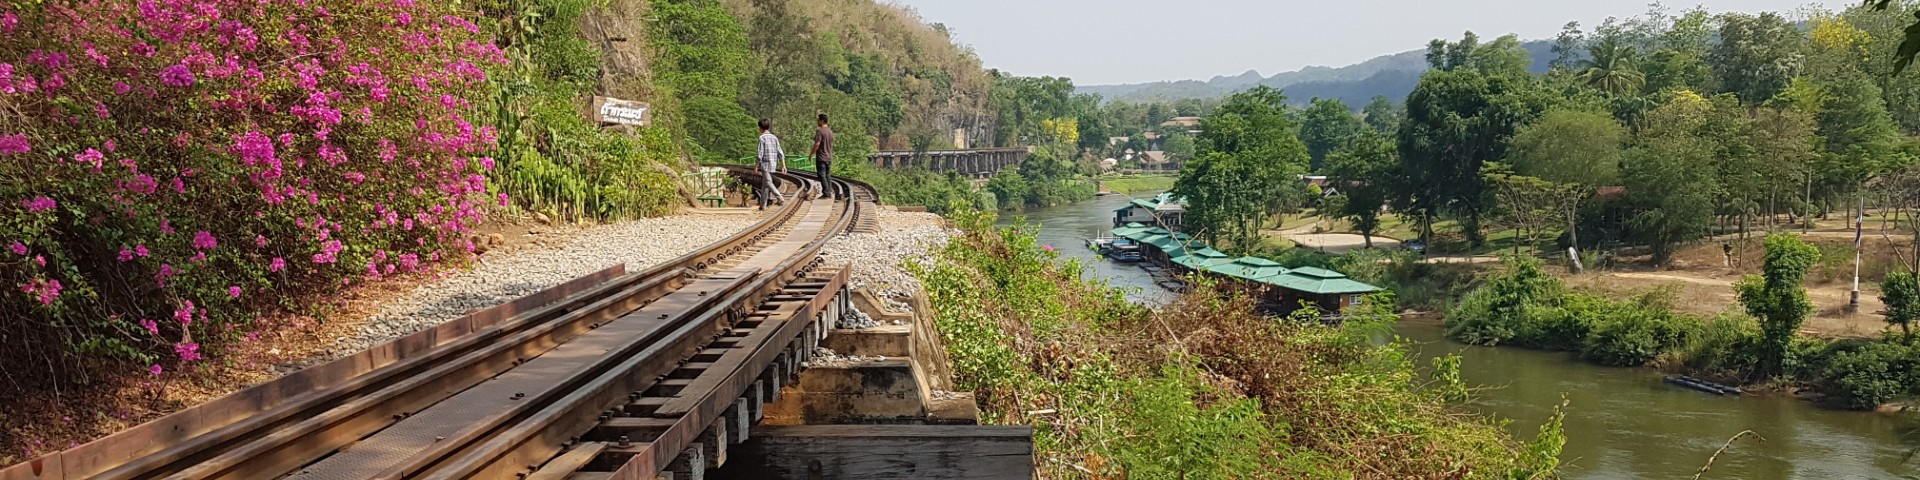 Death Railway beside the Khwae River, Sai Yok District, Kanchanaburi Province